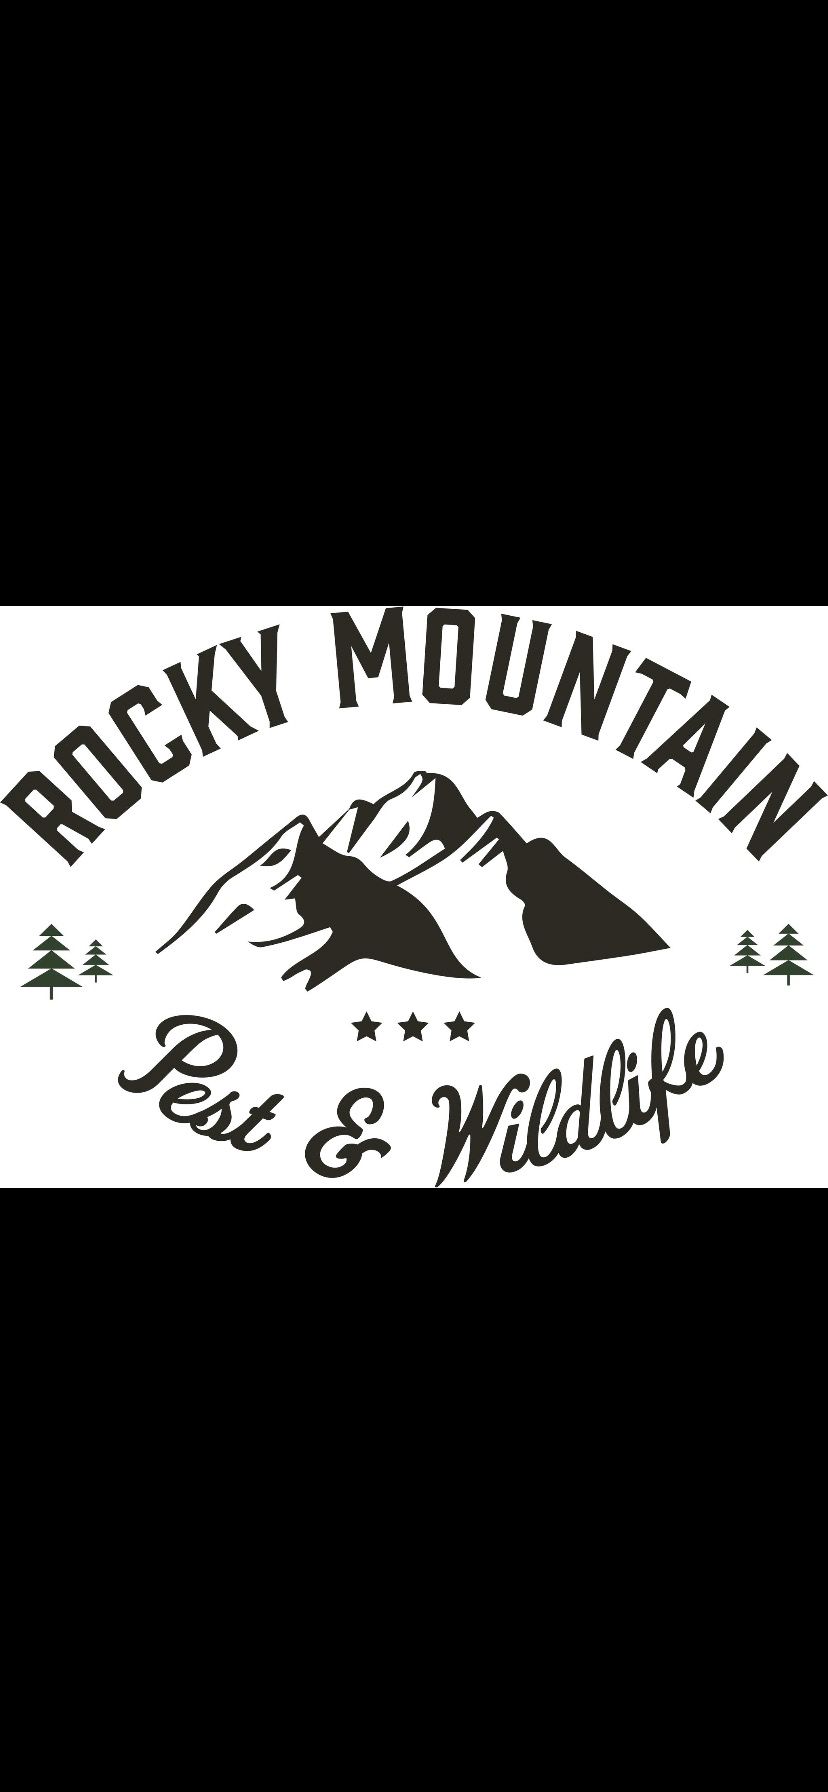 Rocky Mountain Pest and Wildlife